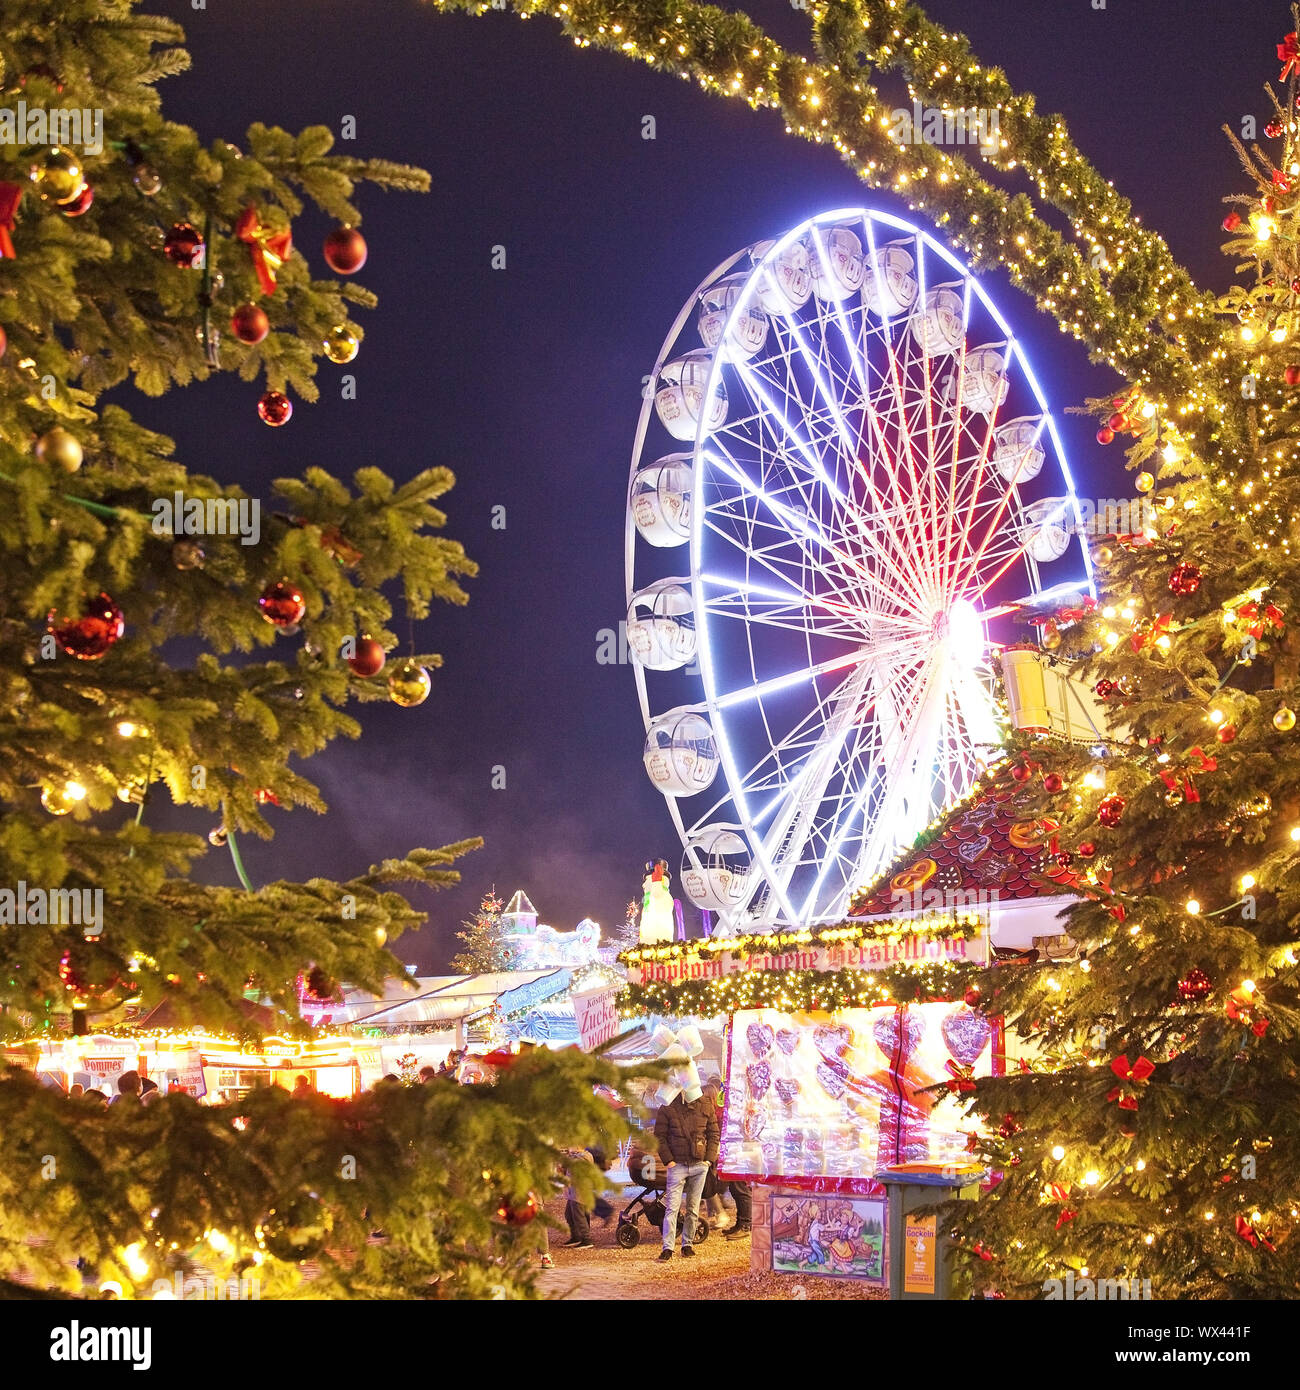 Cranger Christmas Magic, Christmas Market, Herne, Ruhr Area, North Rhine-Westphalia, Germany, Europe Stock Photo